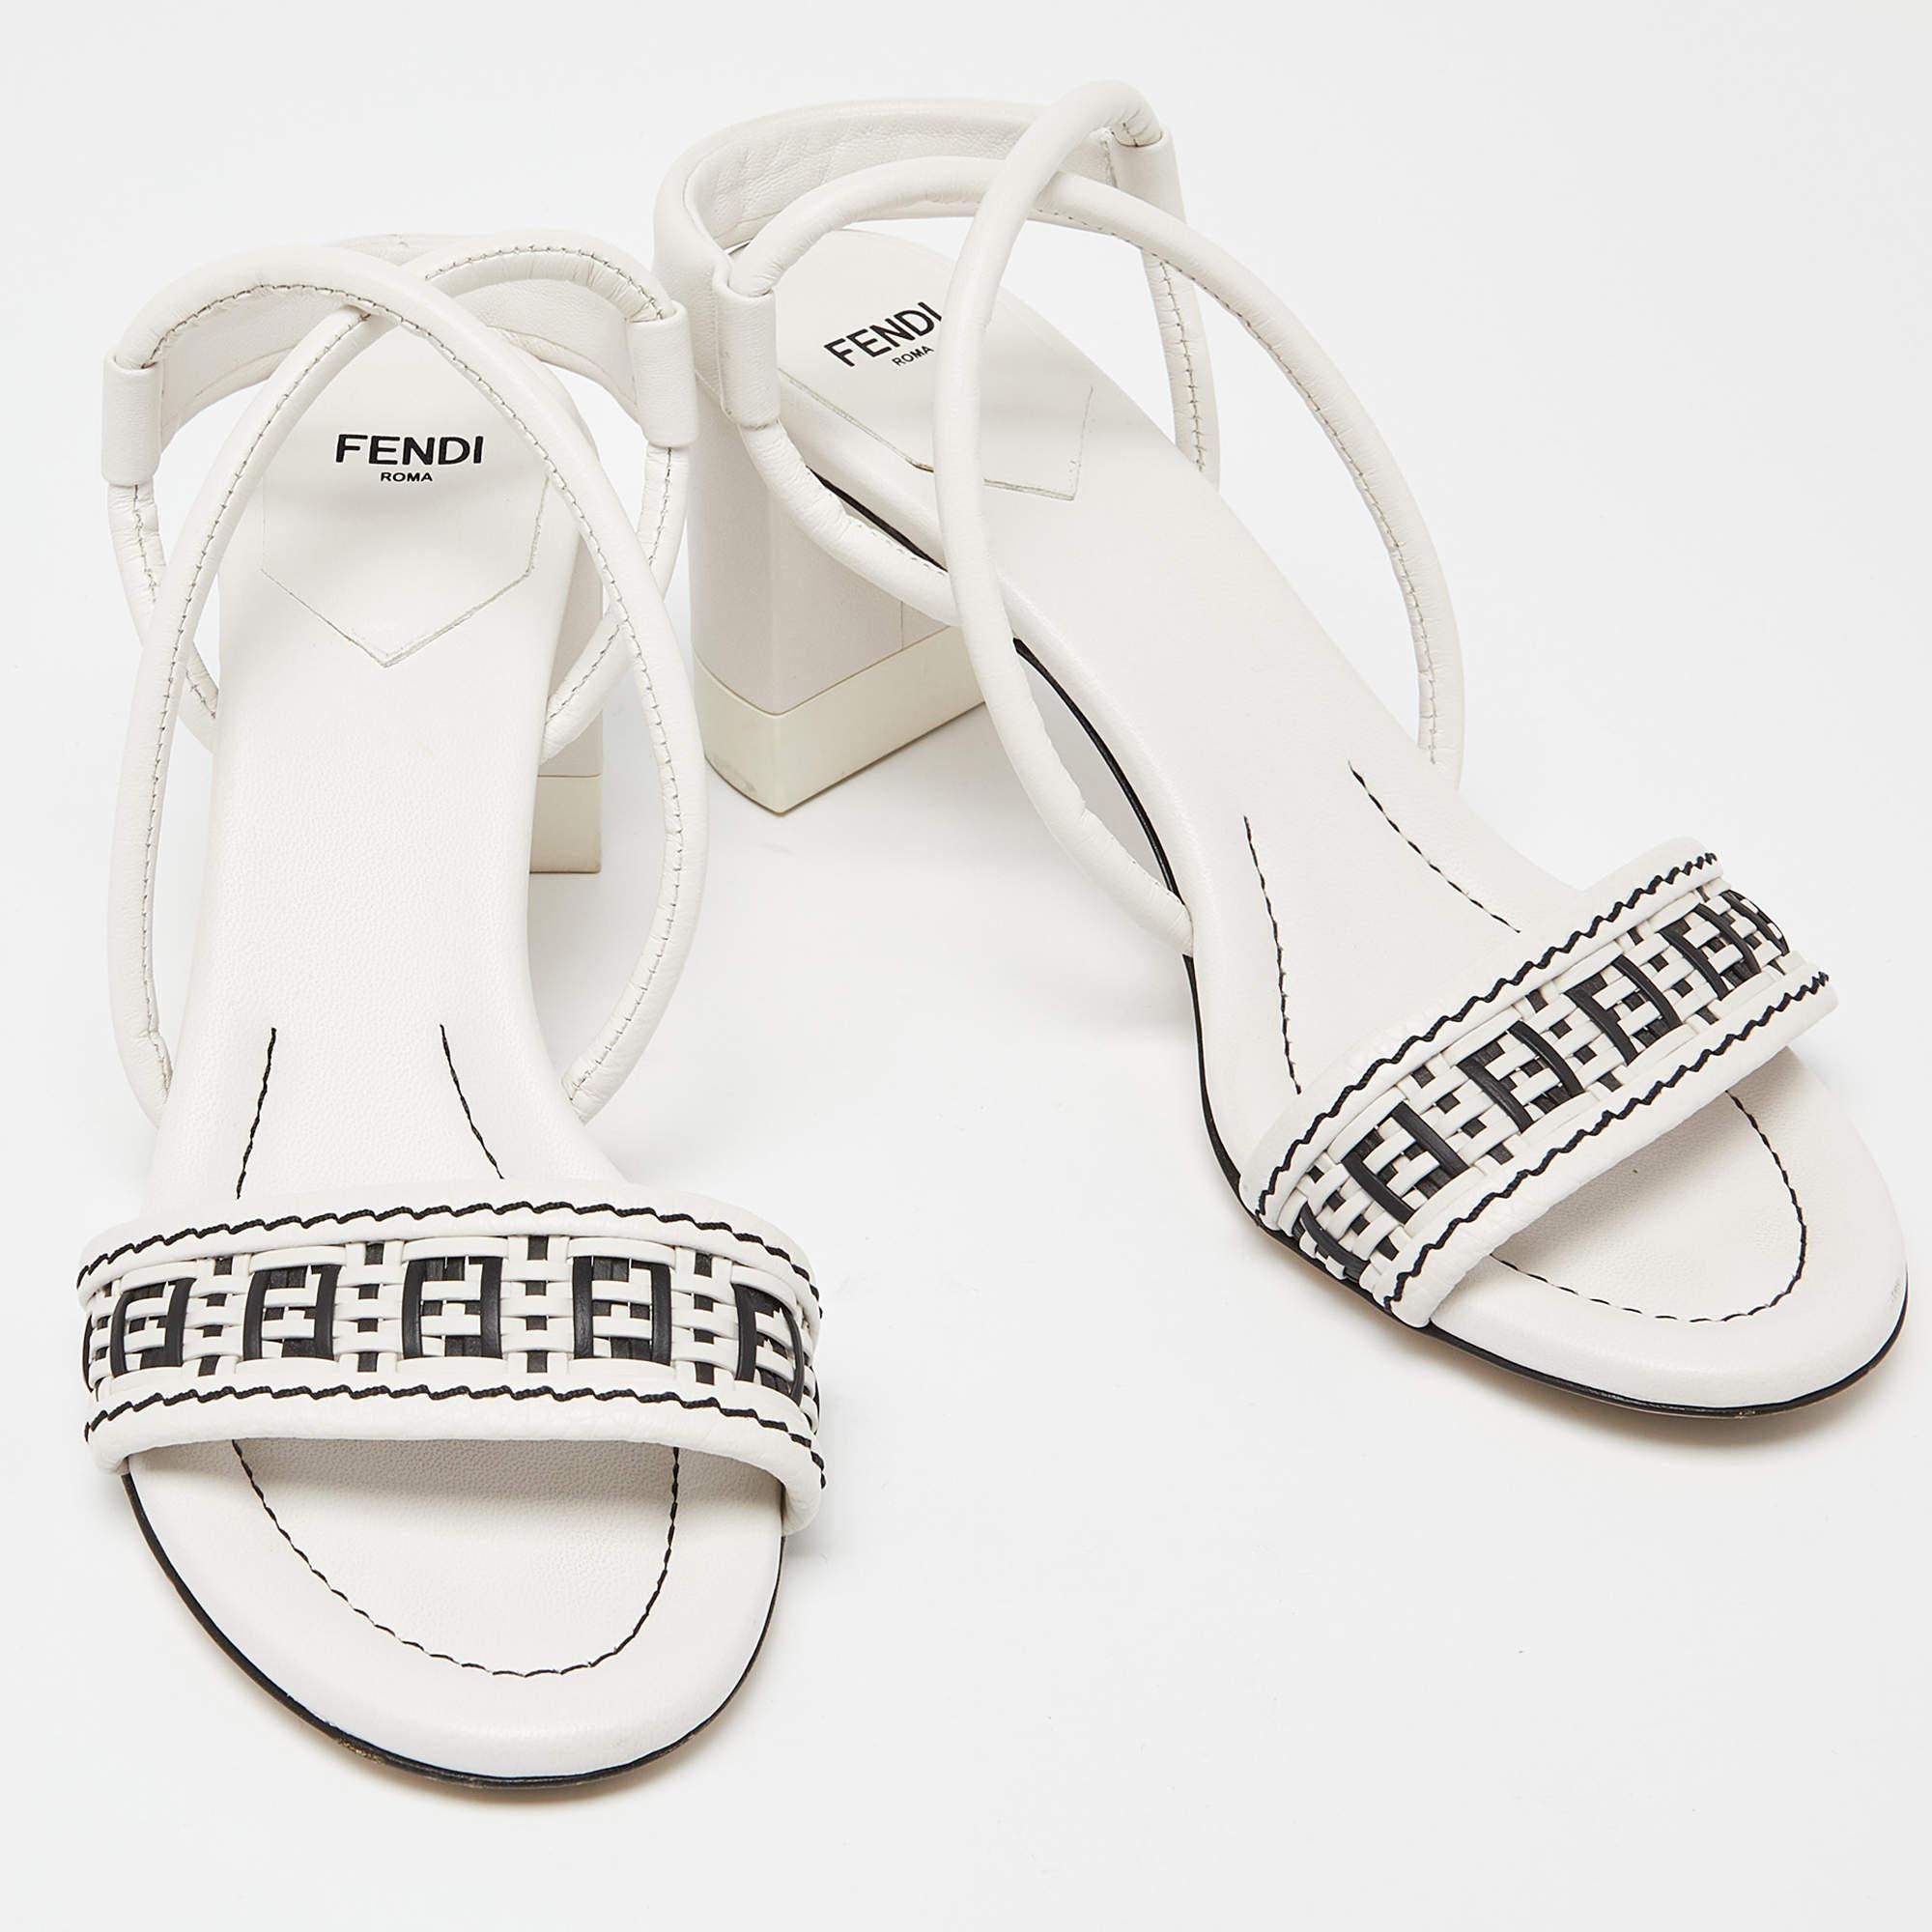 Fendi White/Black Leather Block Heel Ankle Strap Sandals Size 38 1